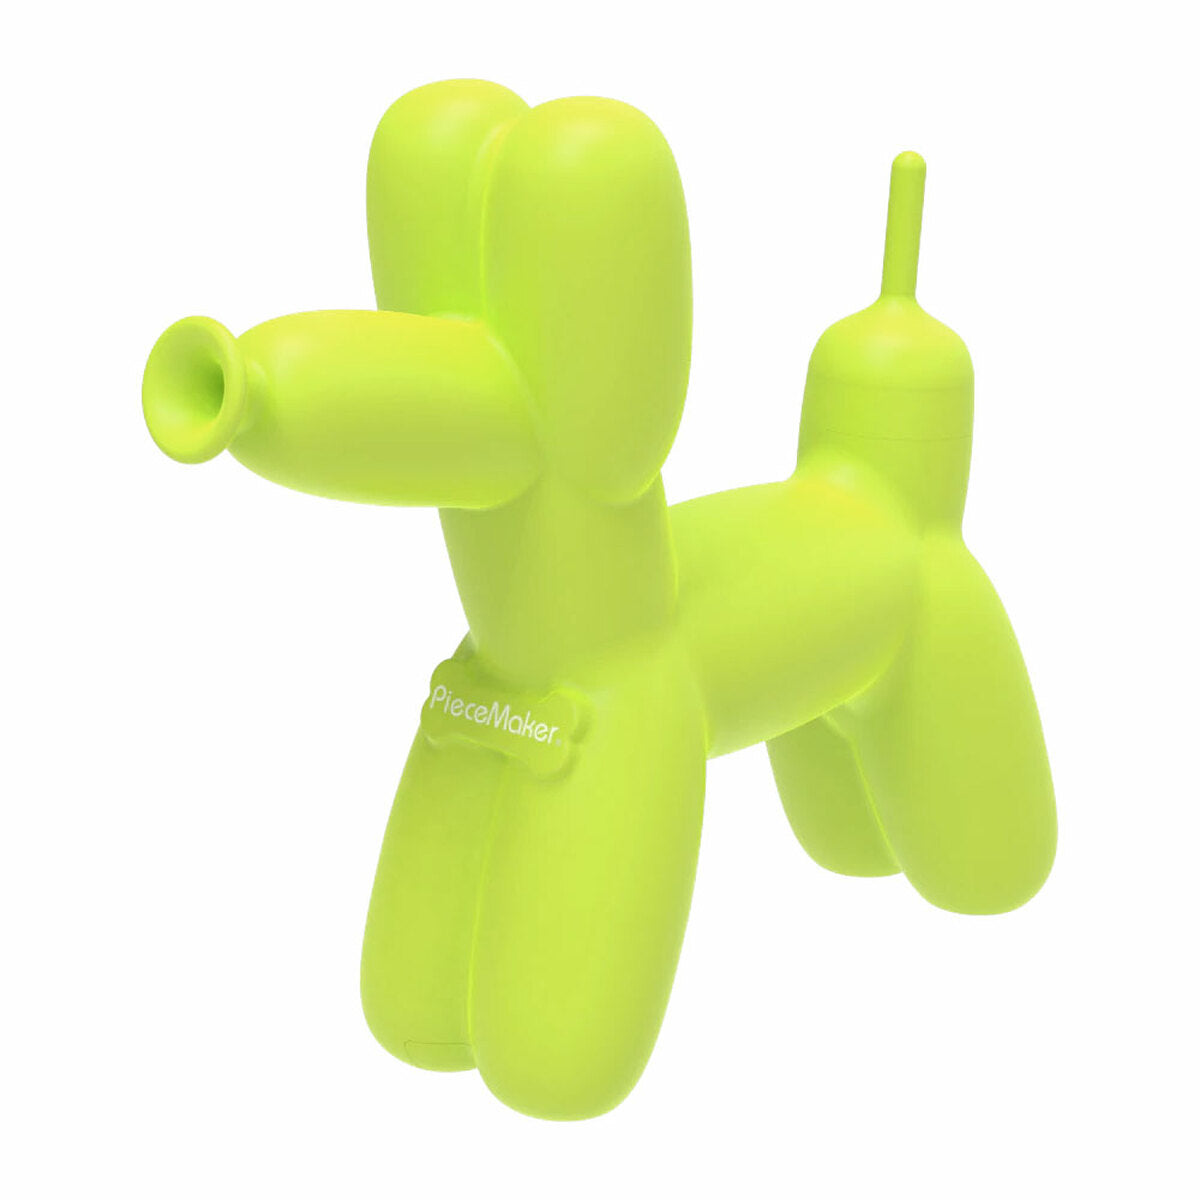 K9 Silicone Kannimal Balloon Dog RIg | Piece Maker